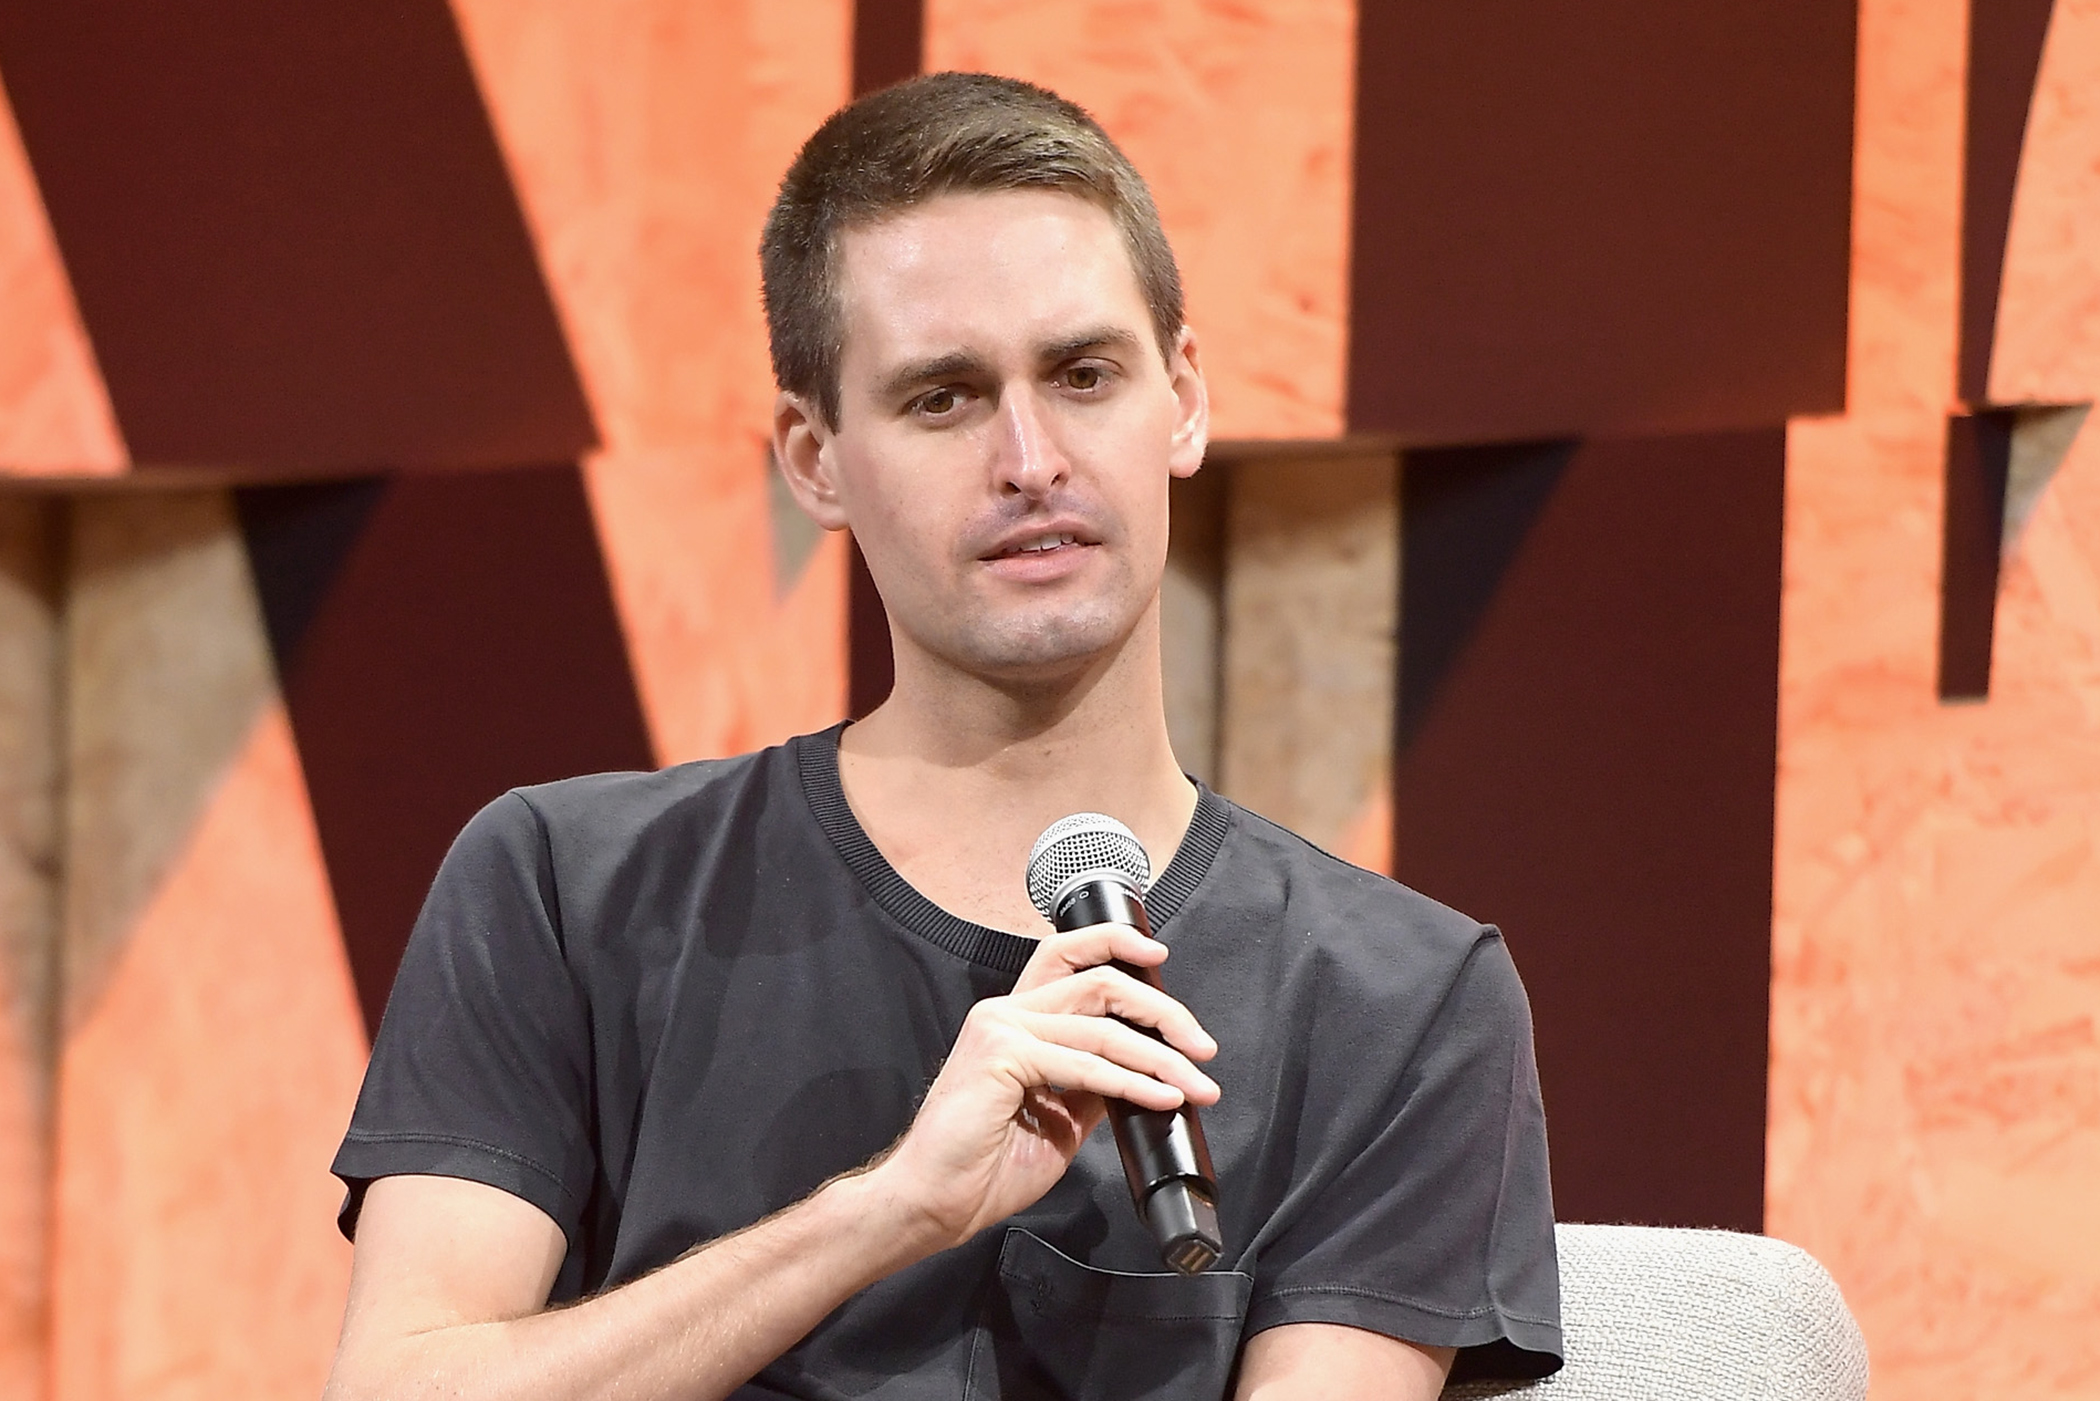 27-Year-Old Snapchat CEO Evan Spiegel Lost Half a Billion Dollars This Week